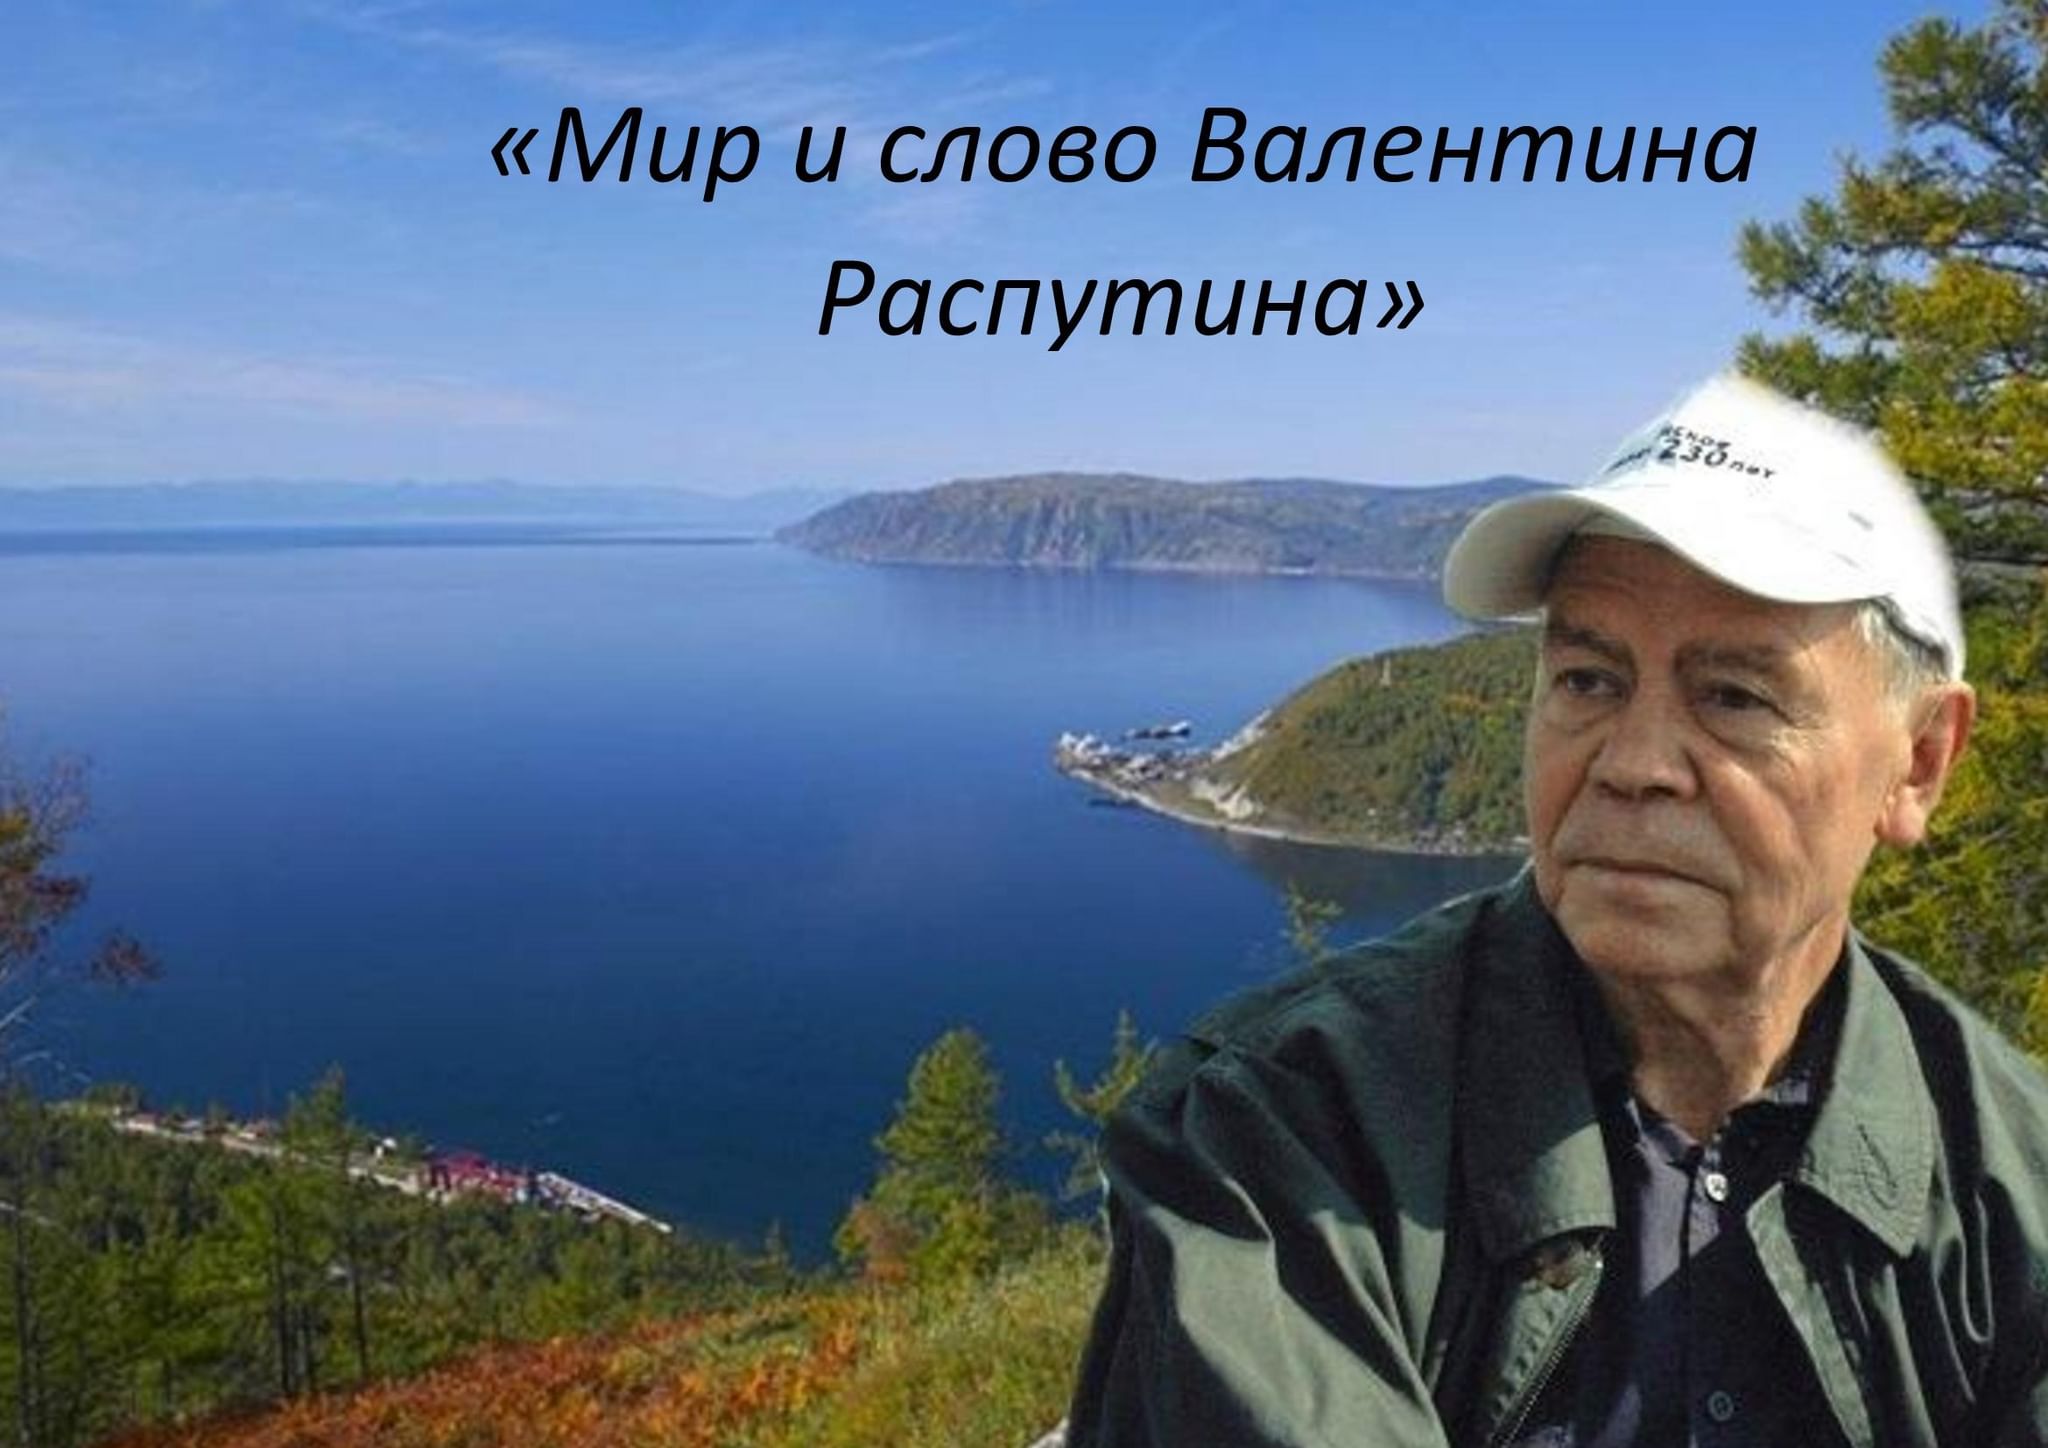 Валентин Распутин на Байкале